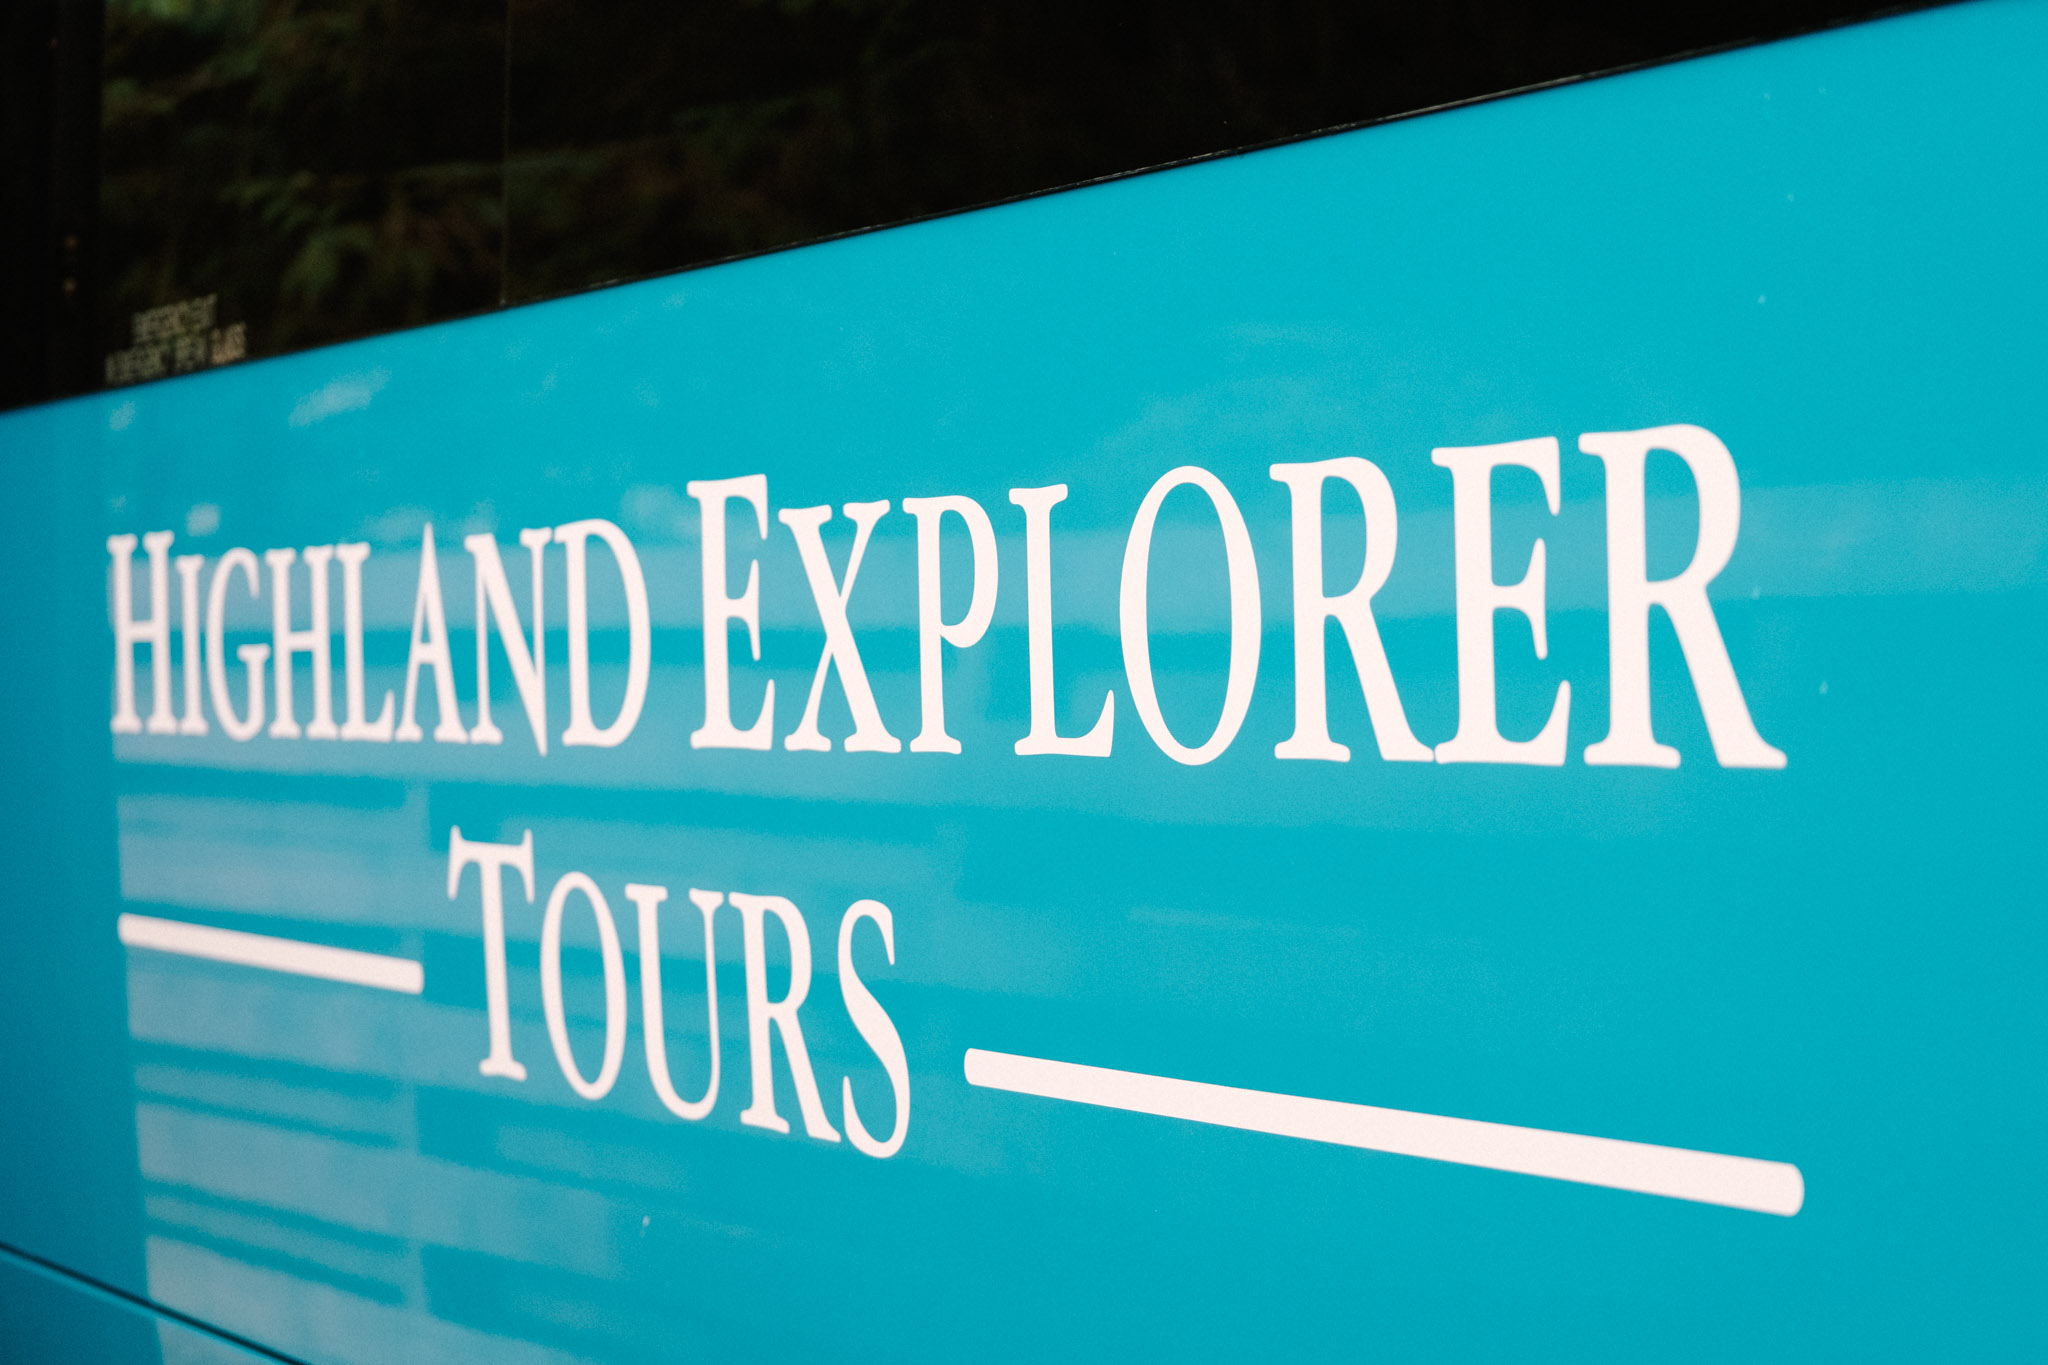 Highland Explorer Tours-160725-180253.jpg